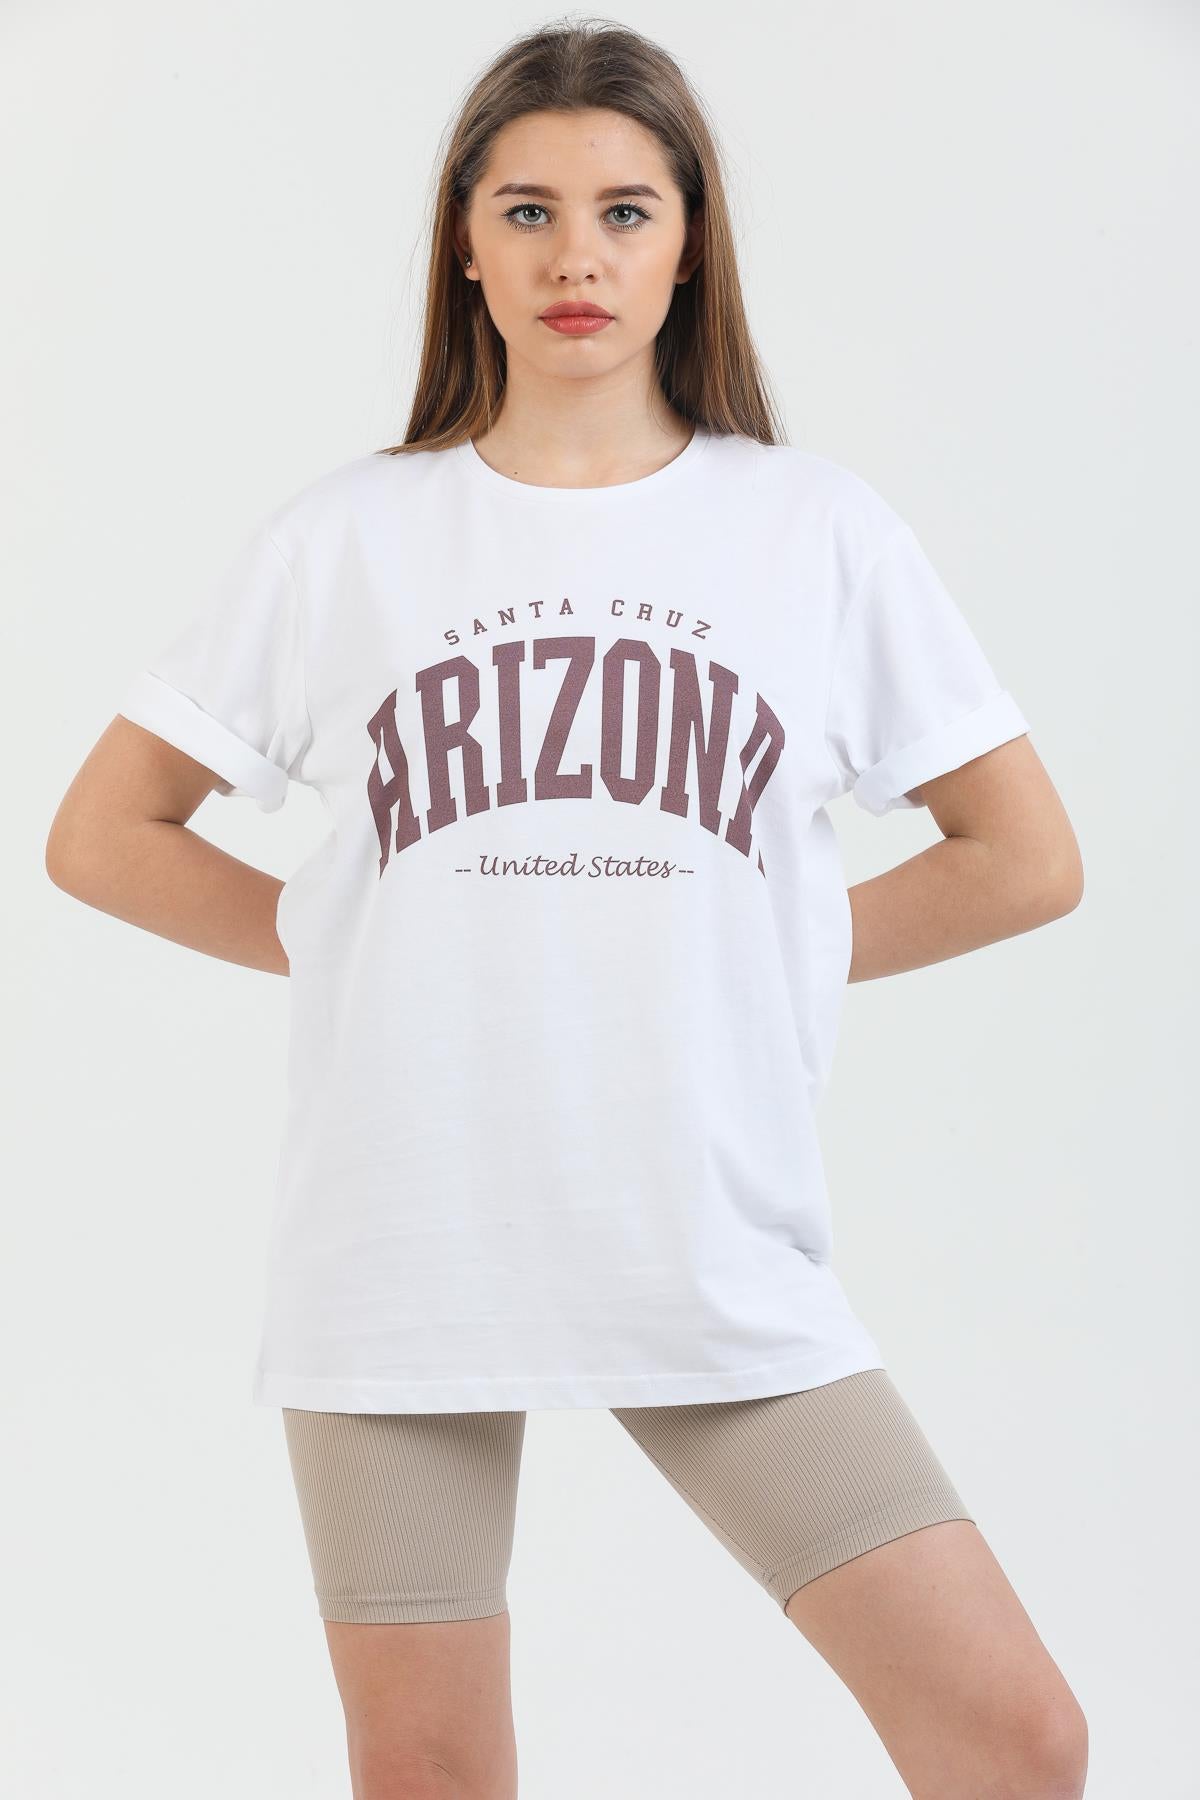 Arizona printed cotton Crew Neck overlooking female t -shirt.